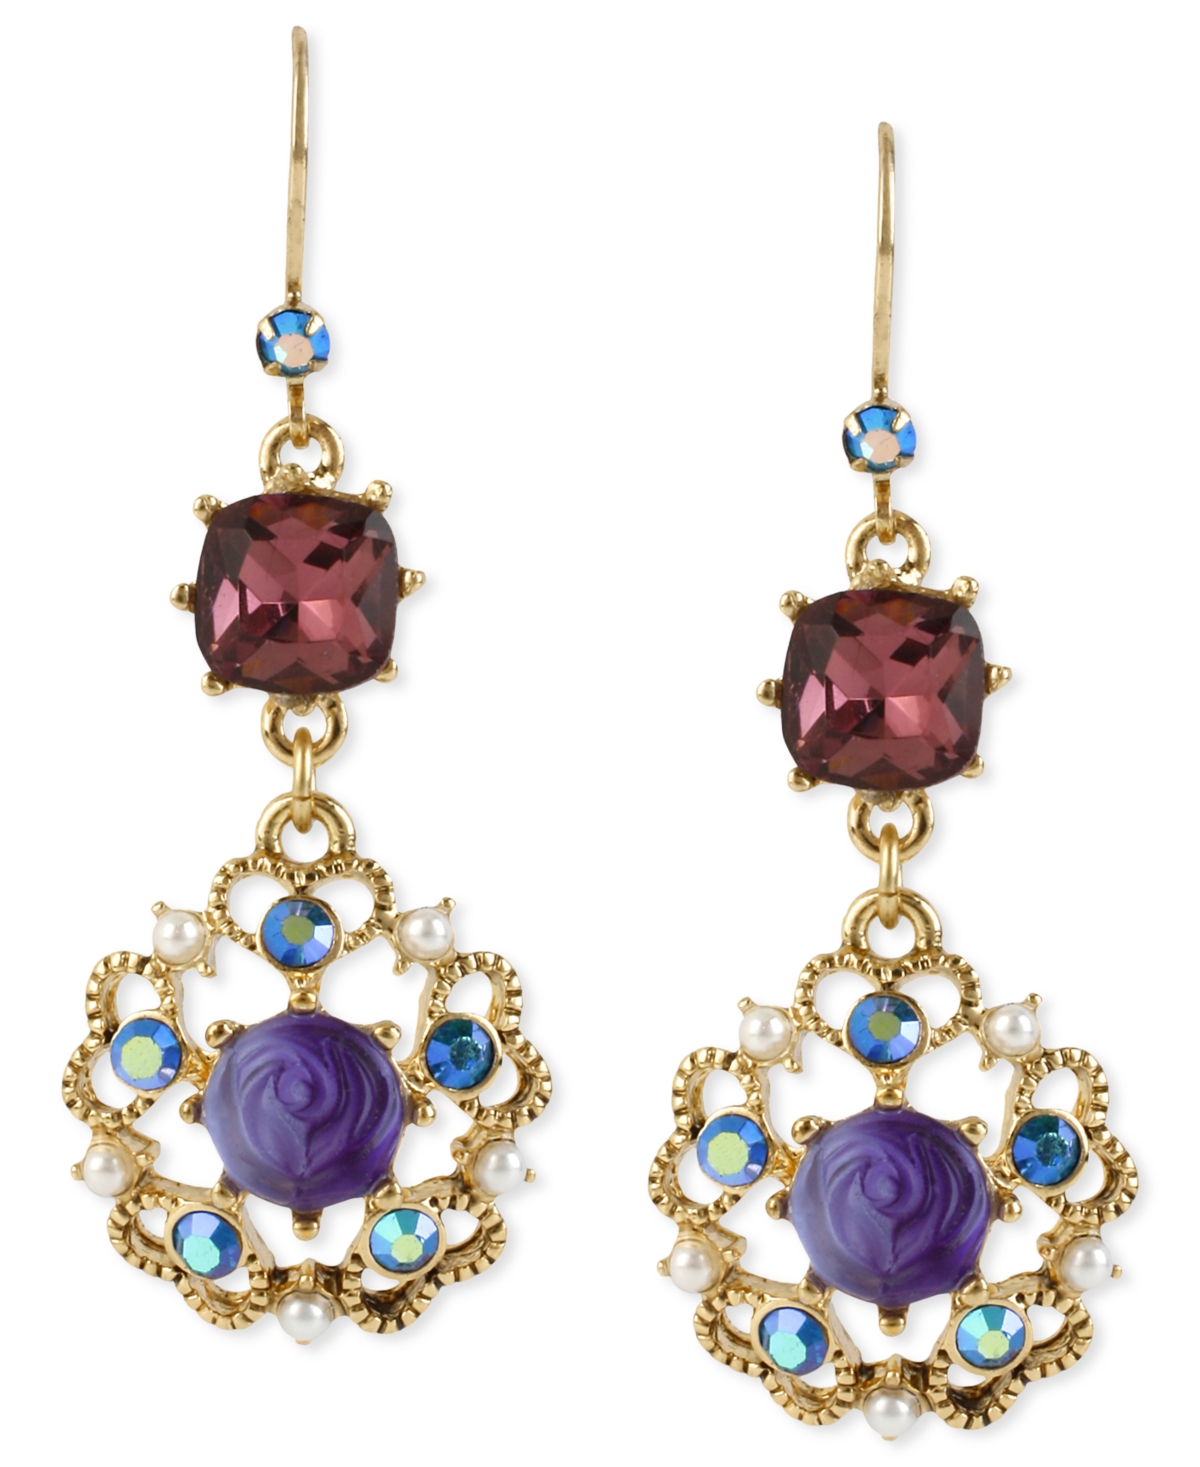 Antique Gold-Tone Flower Medallion Crystal Drop Earrings - Multi